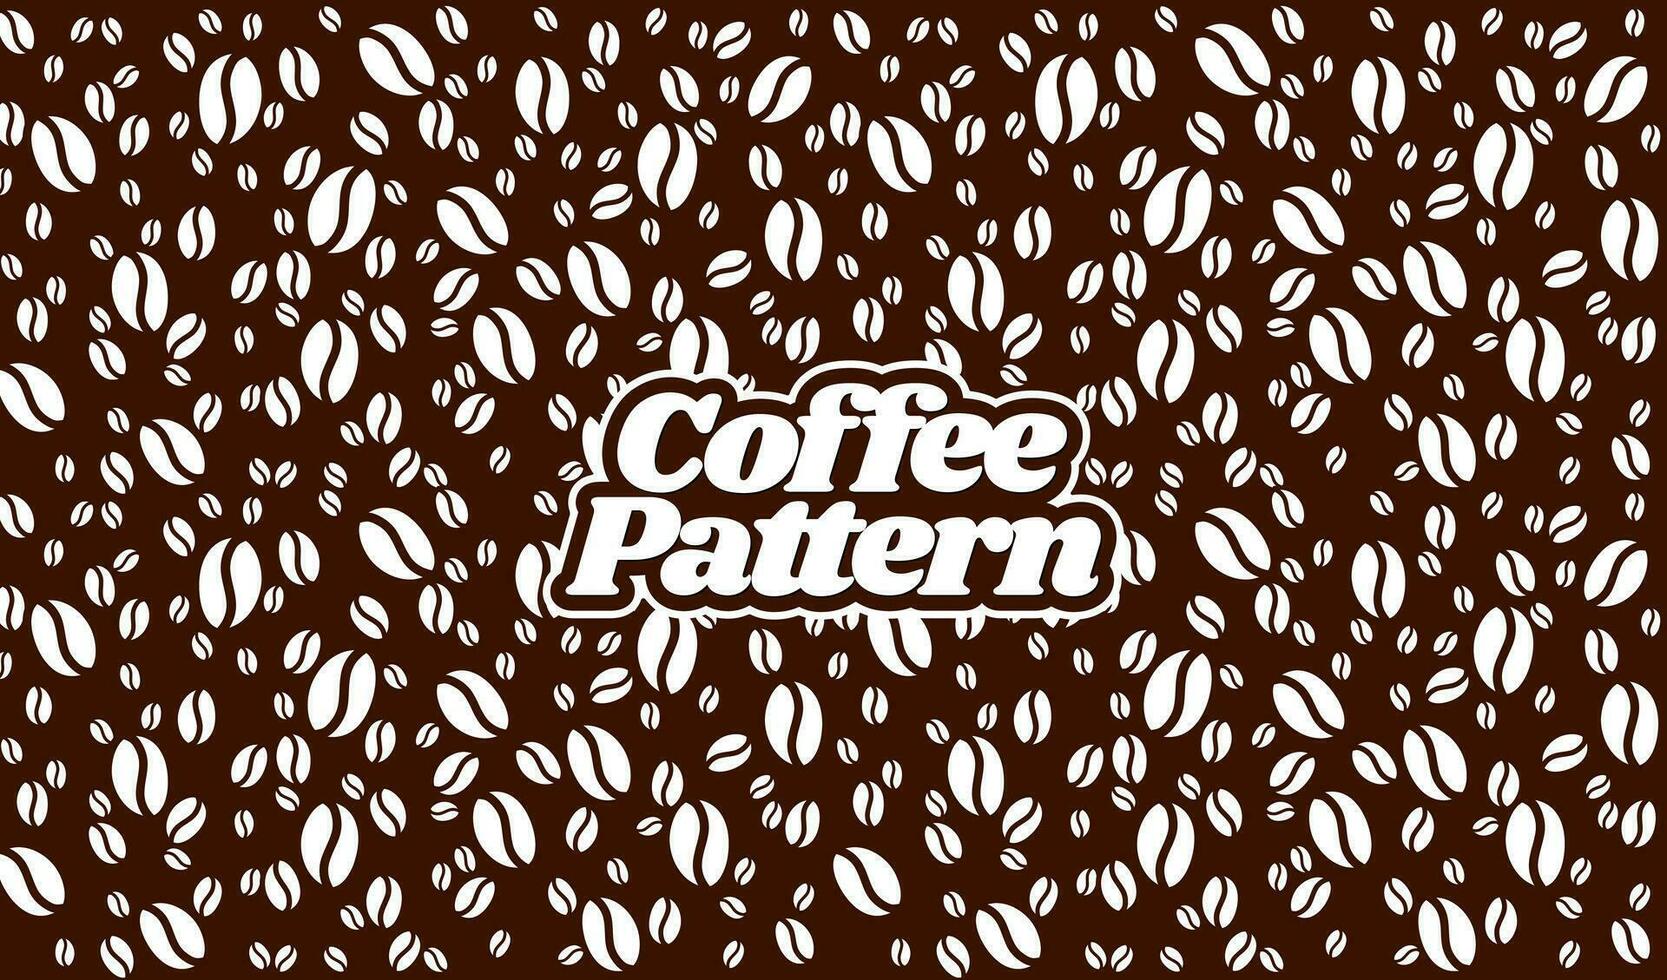 kaffe bönor mönster. bakgrund kaffe bönor mönster. sömlös kaffe böna mönster för förpackning. vektor